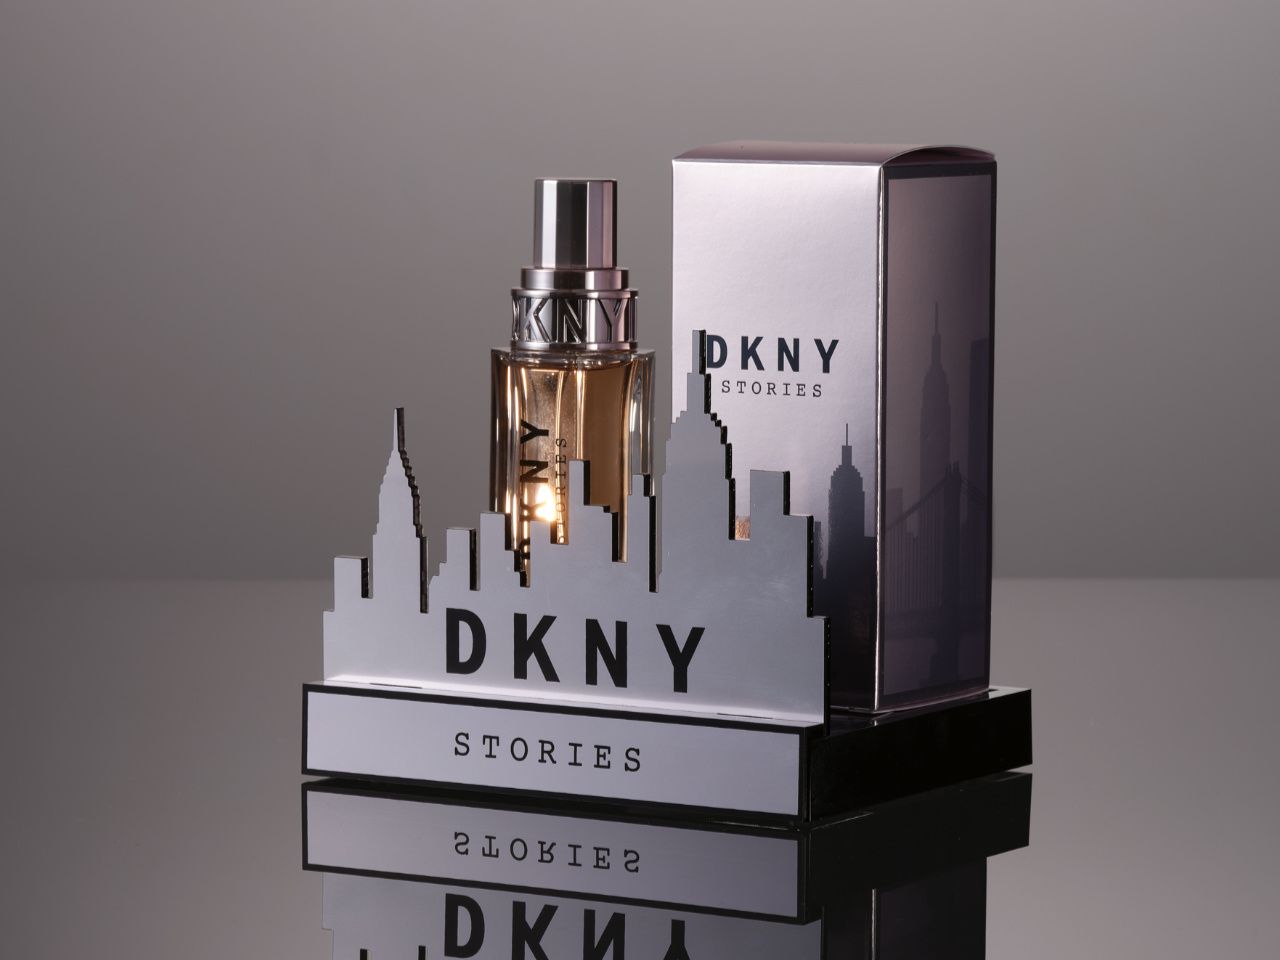 DKNY POS-Display